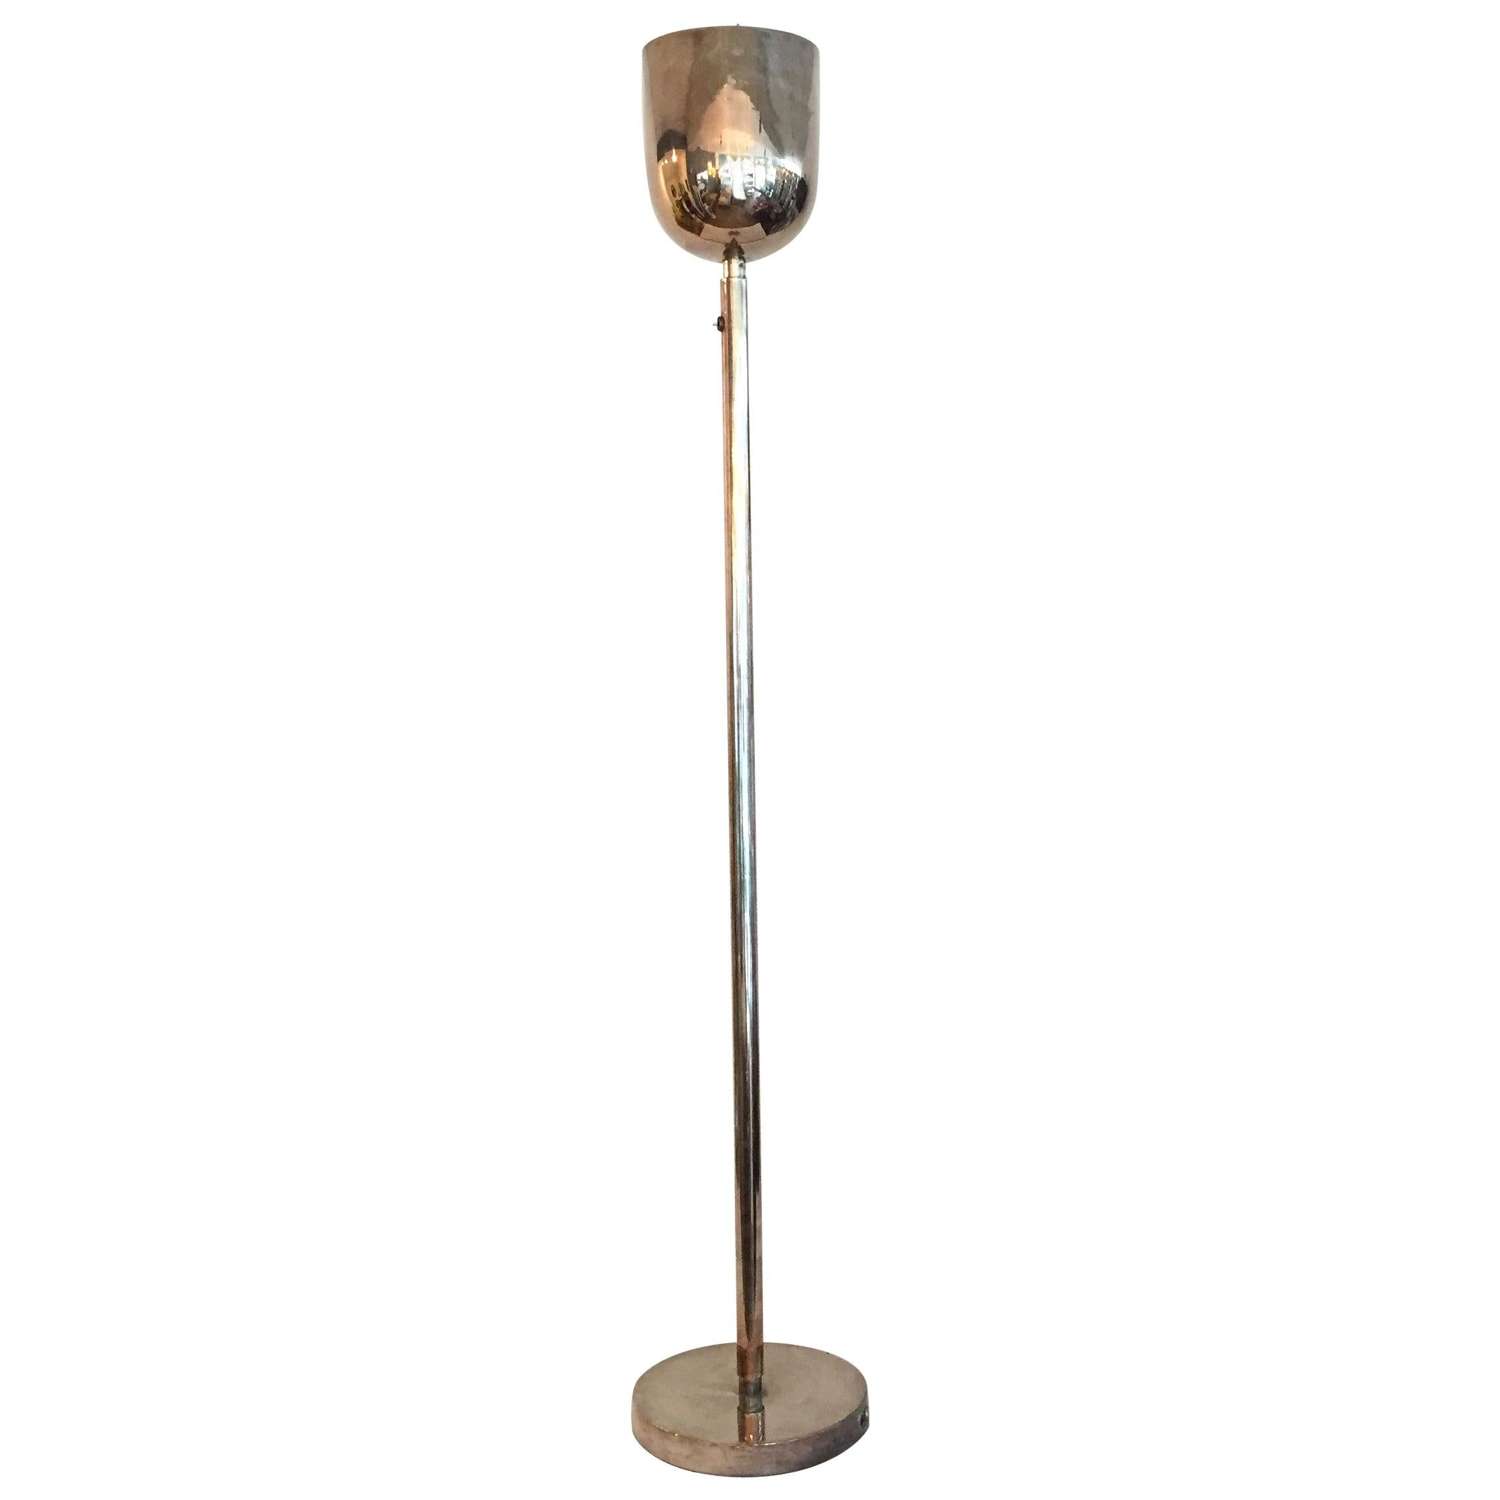 Silver plated modernist floor lamp / lampadaire, Art Deco, 1930's